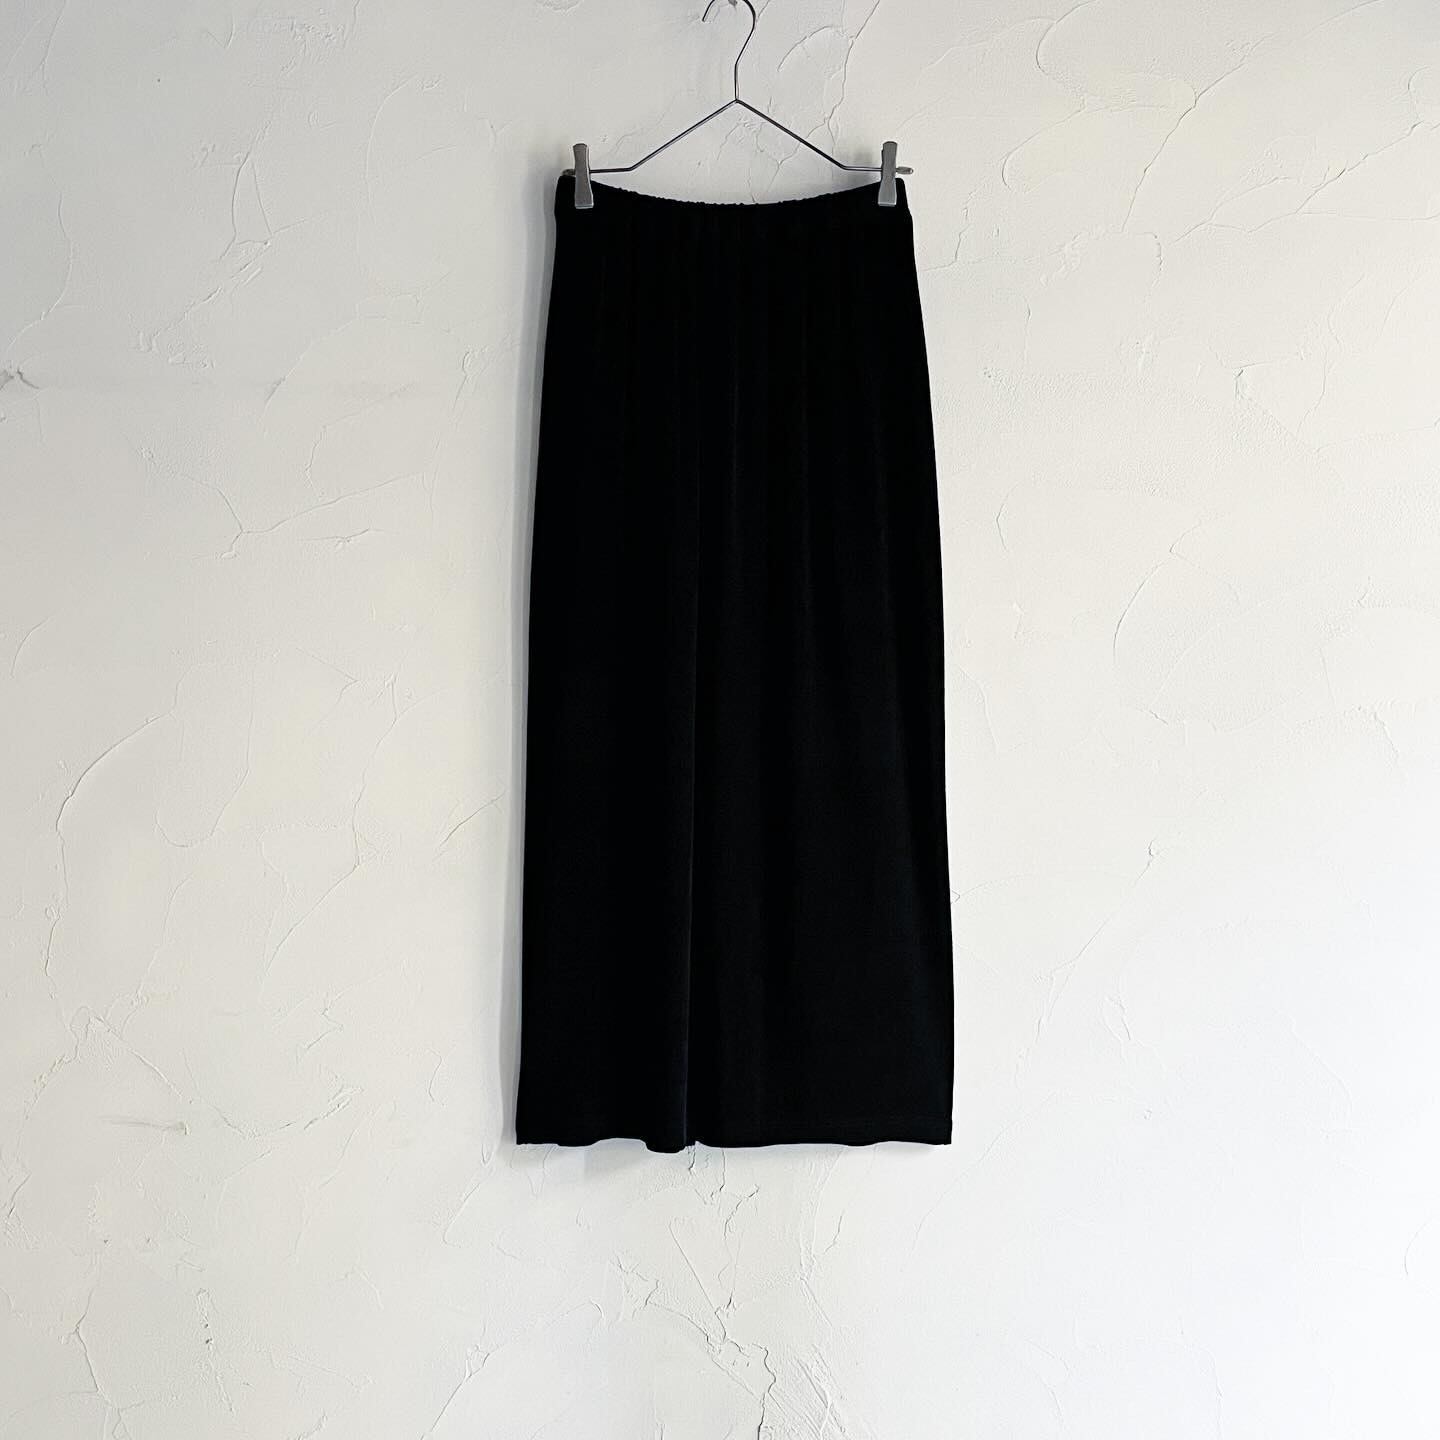 spandex skirt